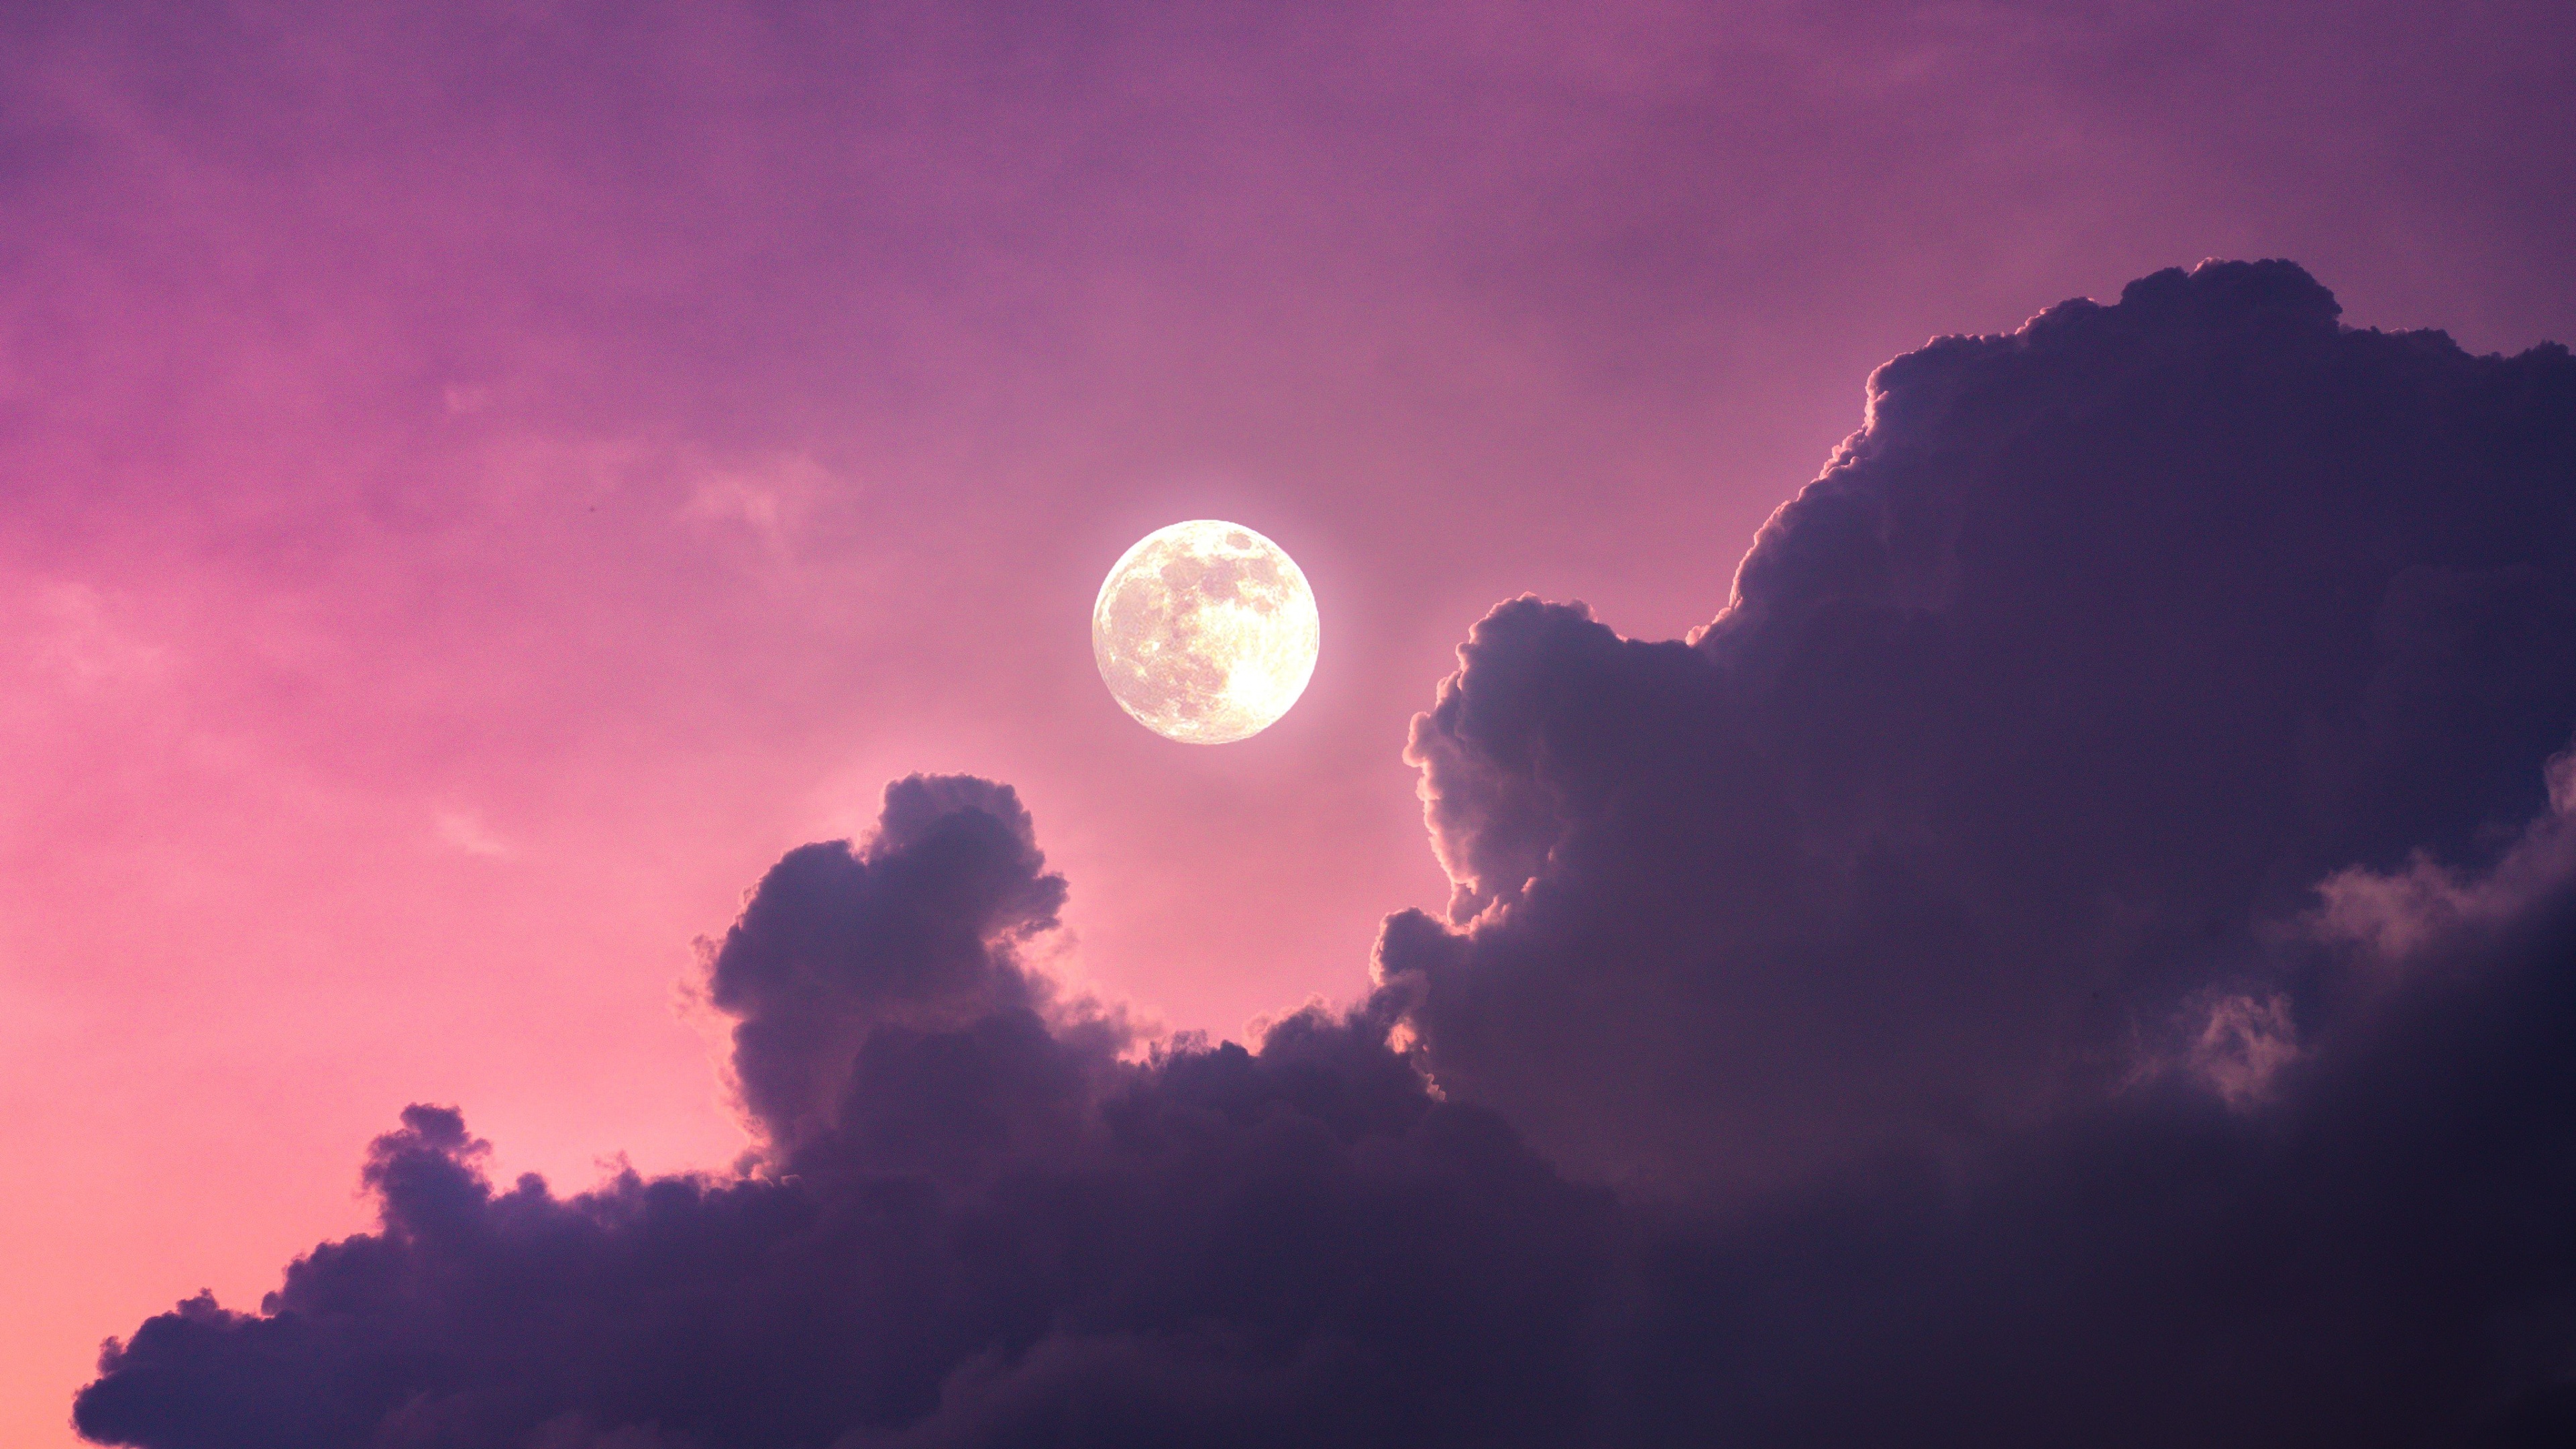 Full moon Wallpaper 4K, Aesthetic, Clouds, Pink sky, #1653